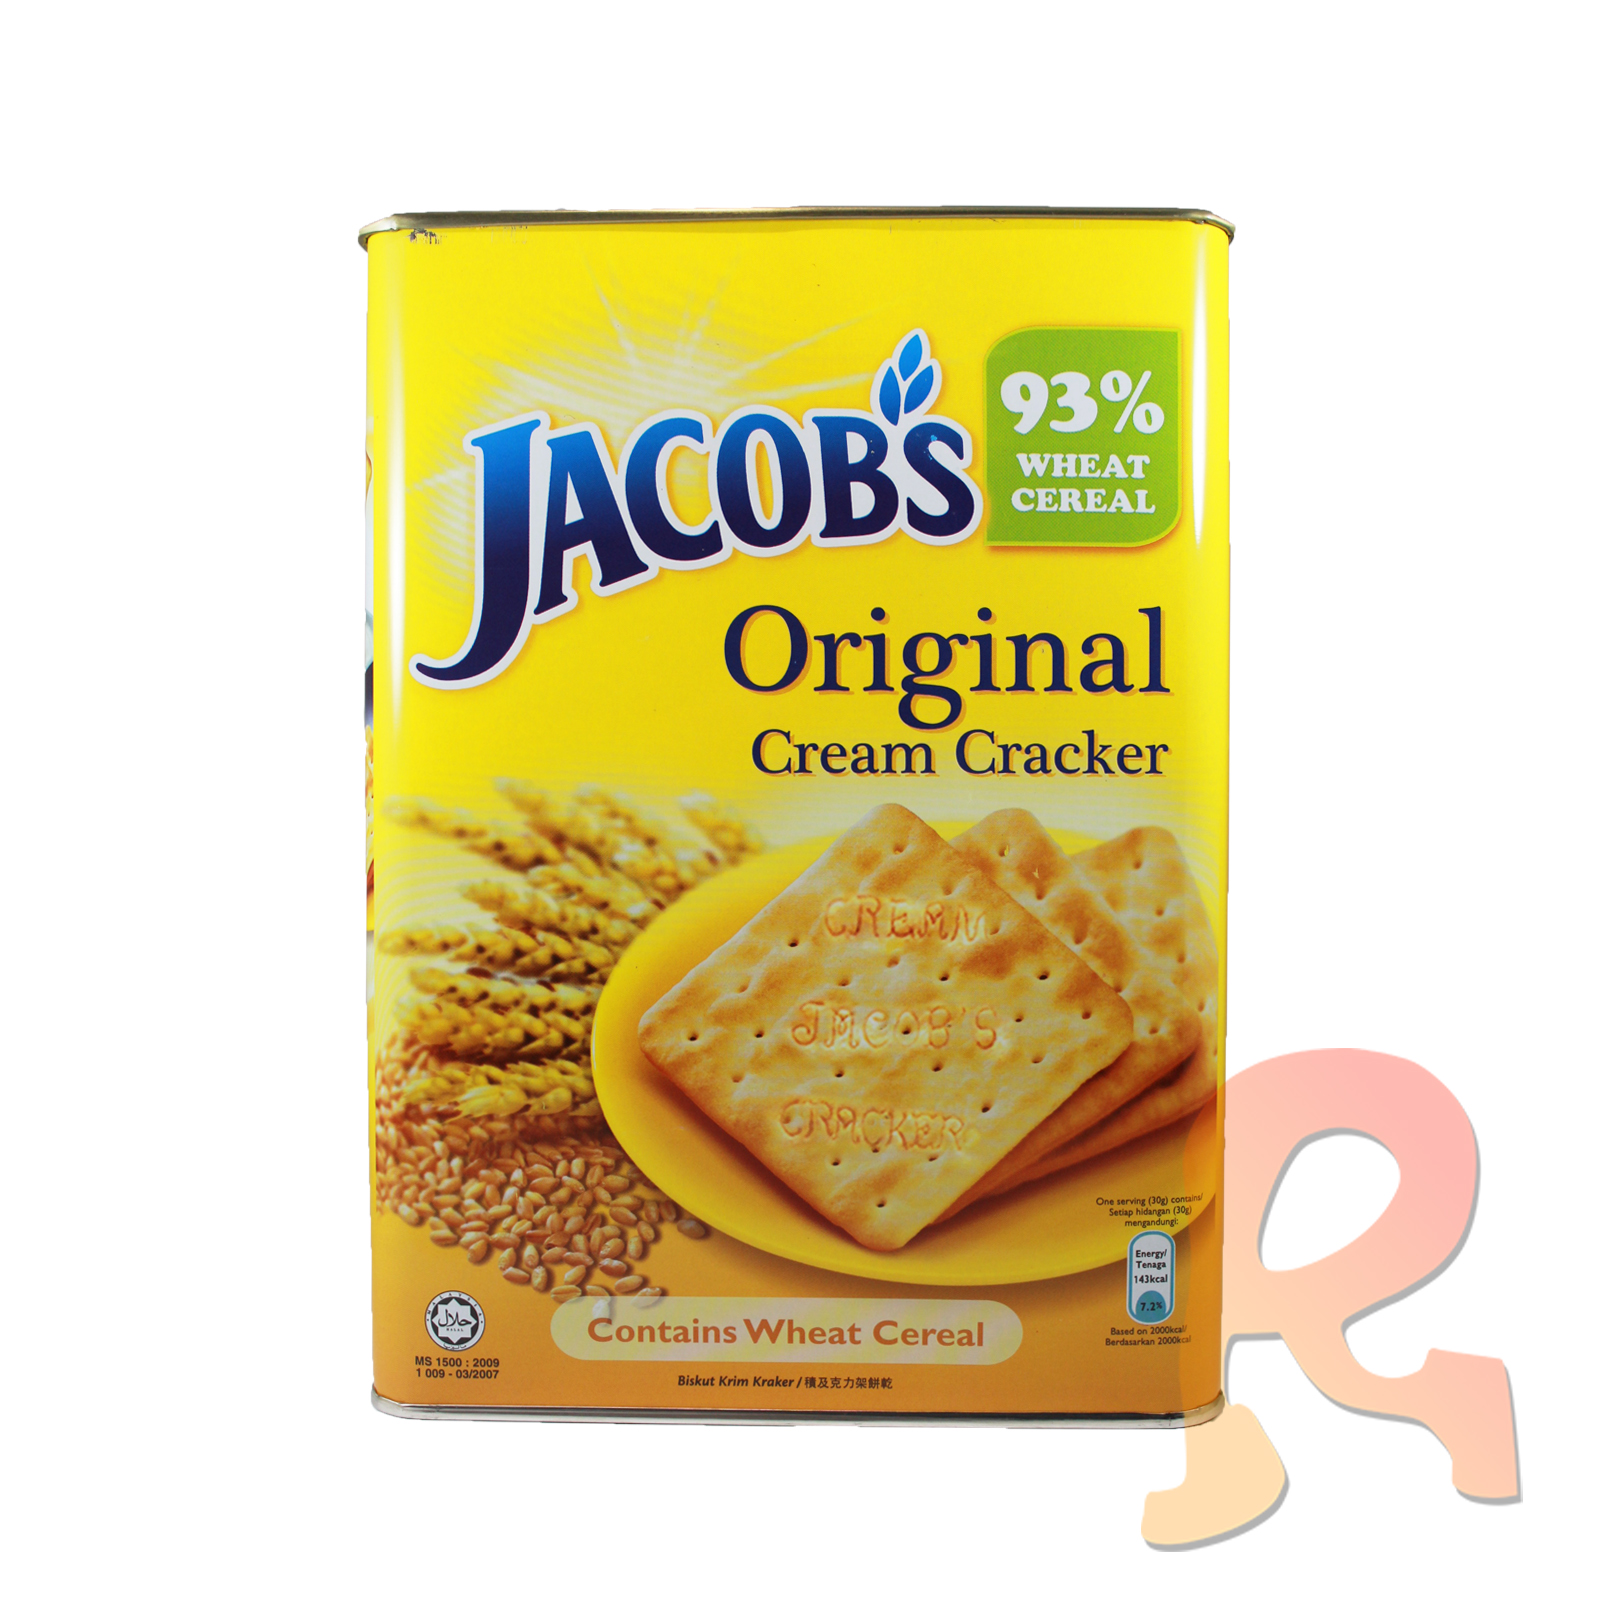 Jacobs Original Cream Cracker Running Man Delivery Running Man Delivery